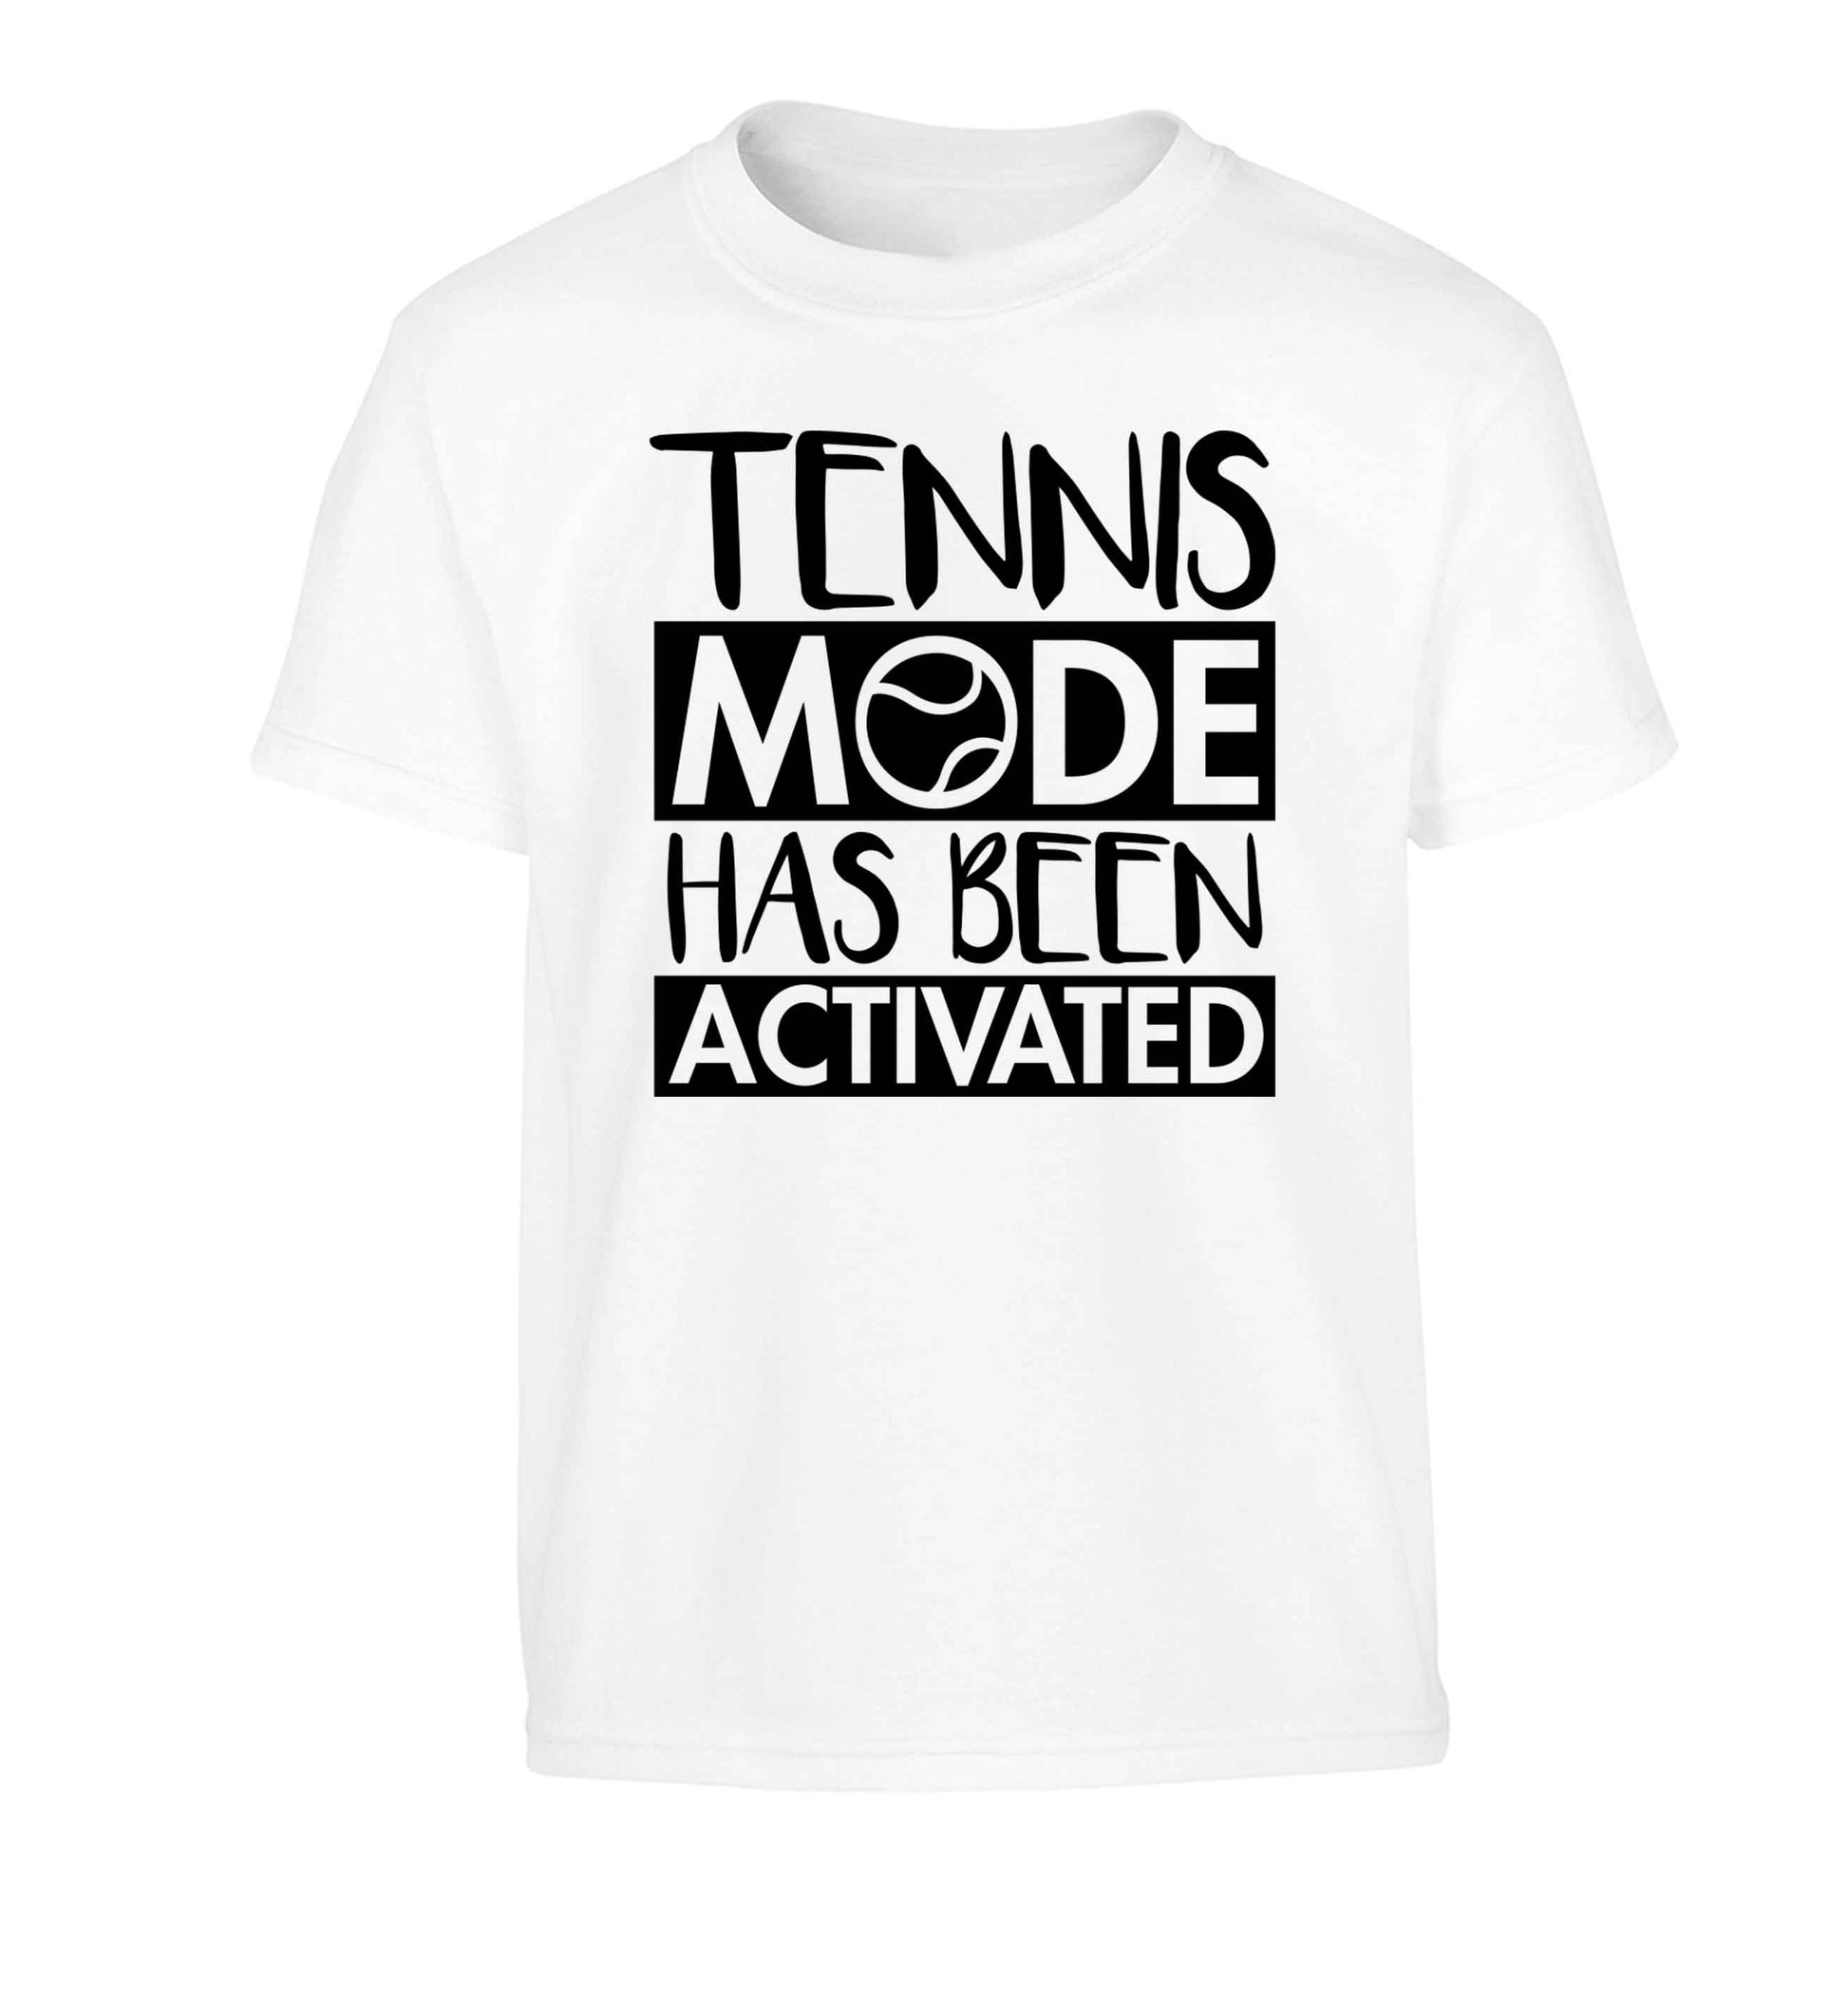 Tennis mode has been activated Children's white Tshirt 12-13 Years